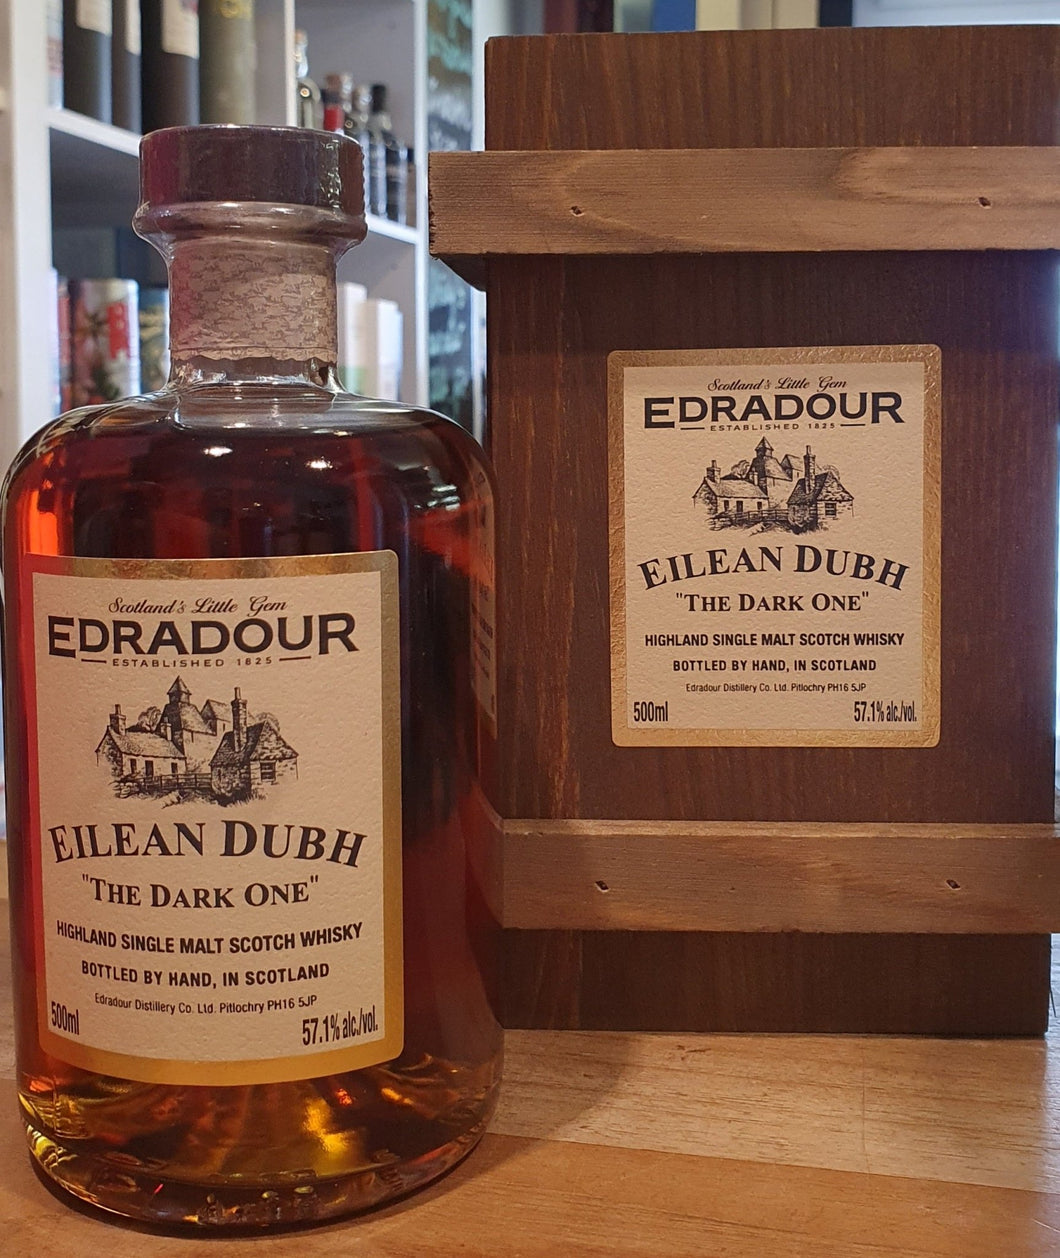 Edradour Eilean Dubh the dark one cask strength 0,5l Fl 57,1%vol. Highland single malt scotch whisky Hand gefüllt